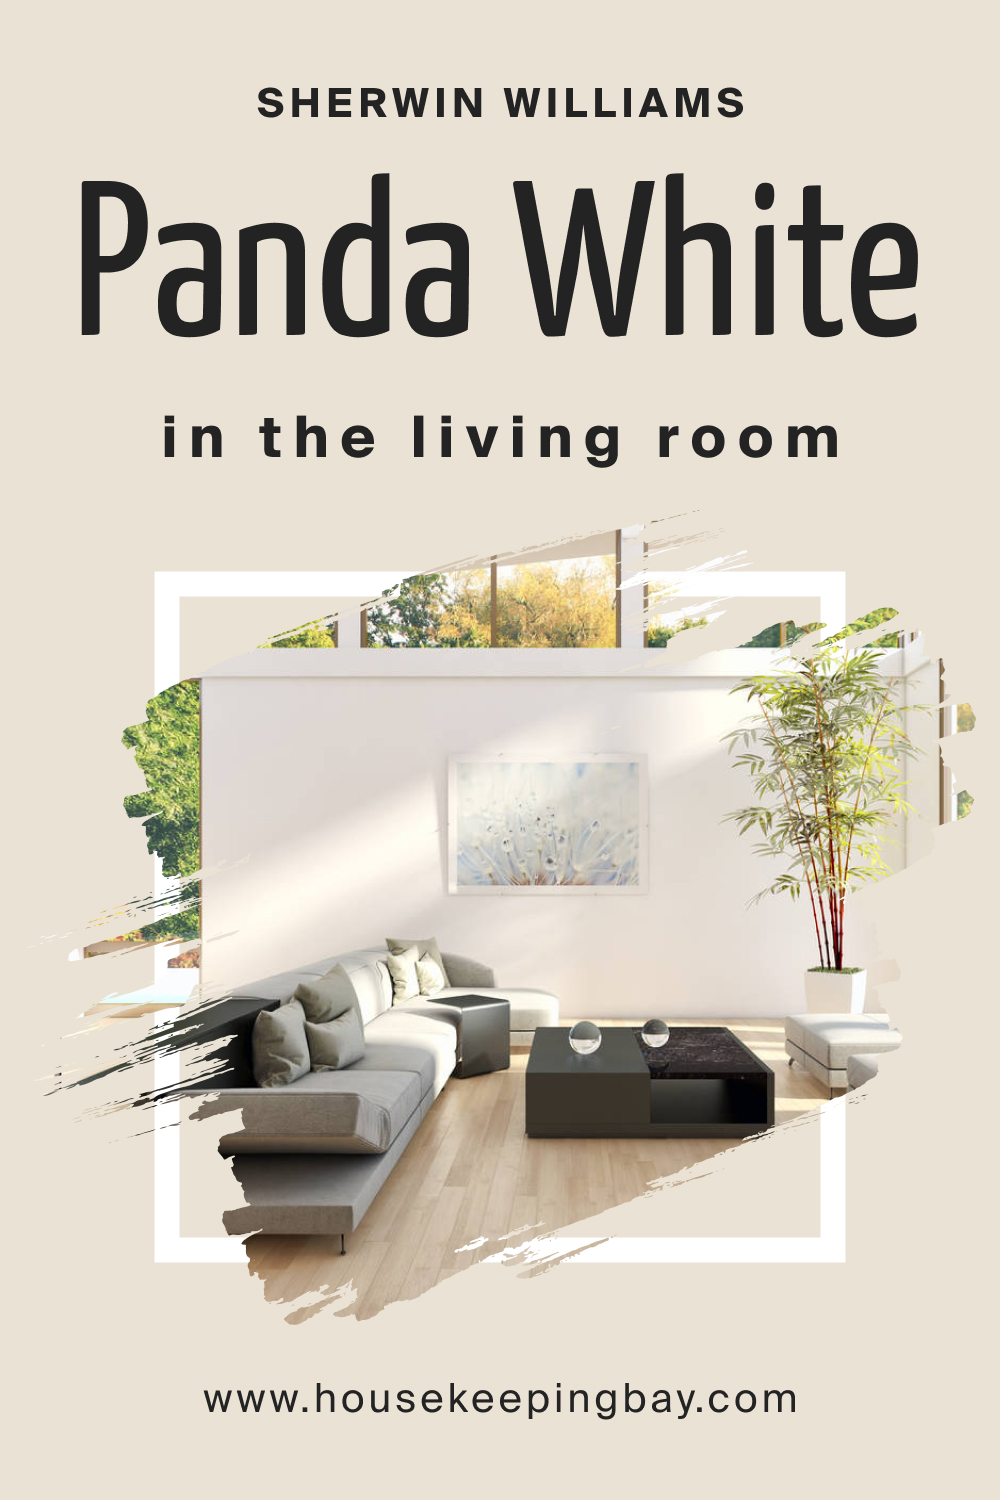 Sherwin Williams. SW Panda White In the Living Room